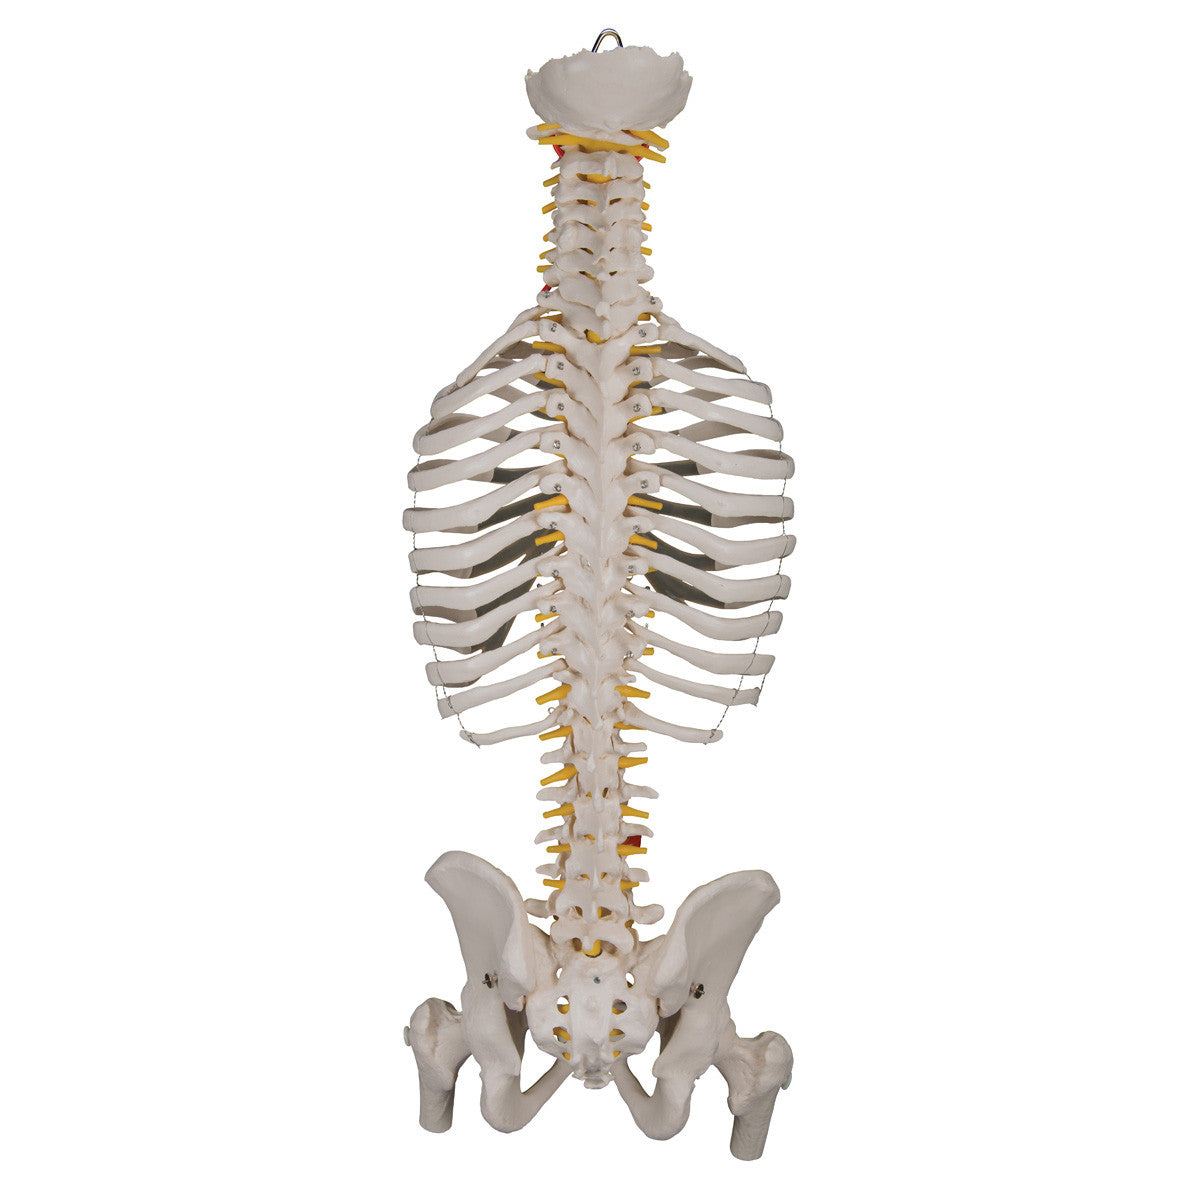 a56-2_04_1200_1200_classic-flexible-human-spine-model-with-ribs-femur-heads-3b-smart-anatomy__40807.1589753250.1280.1280.jpg